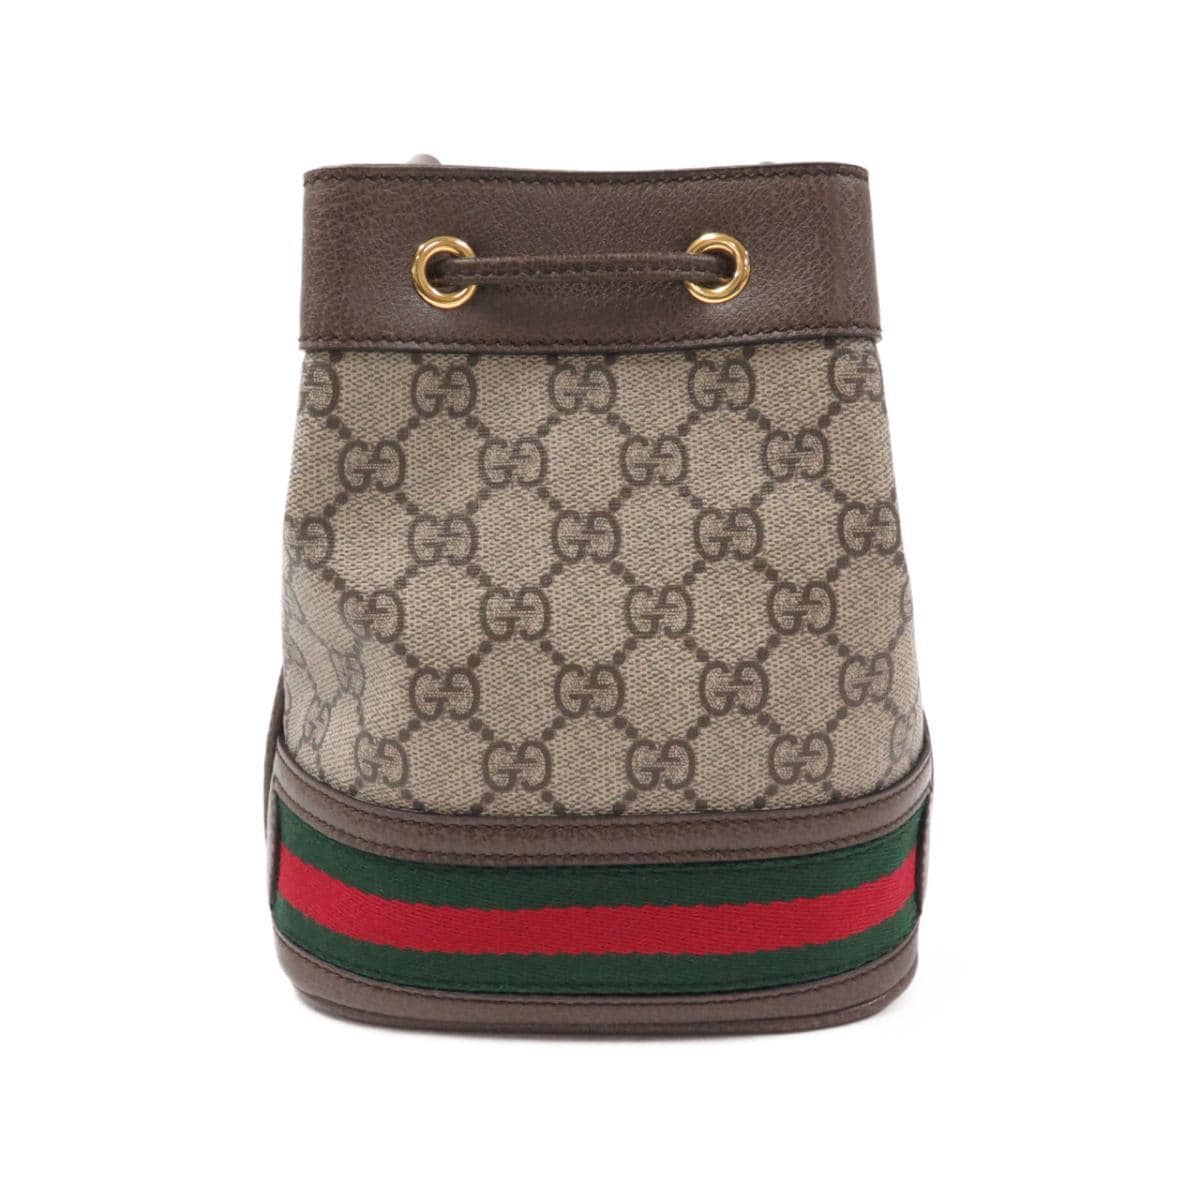 [BRAND NEW] Gucci bag 550620 96I3B